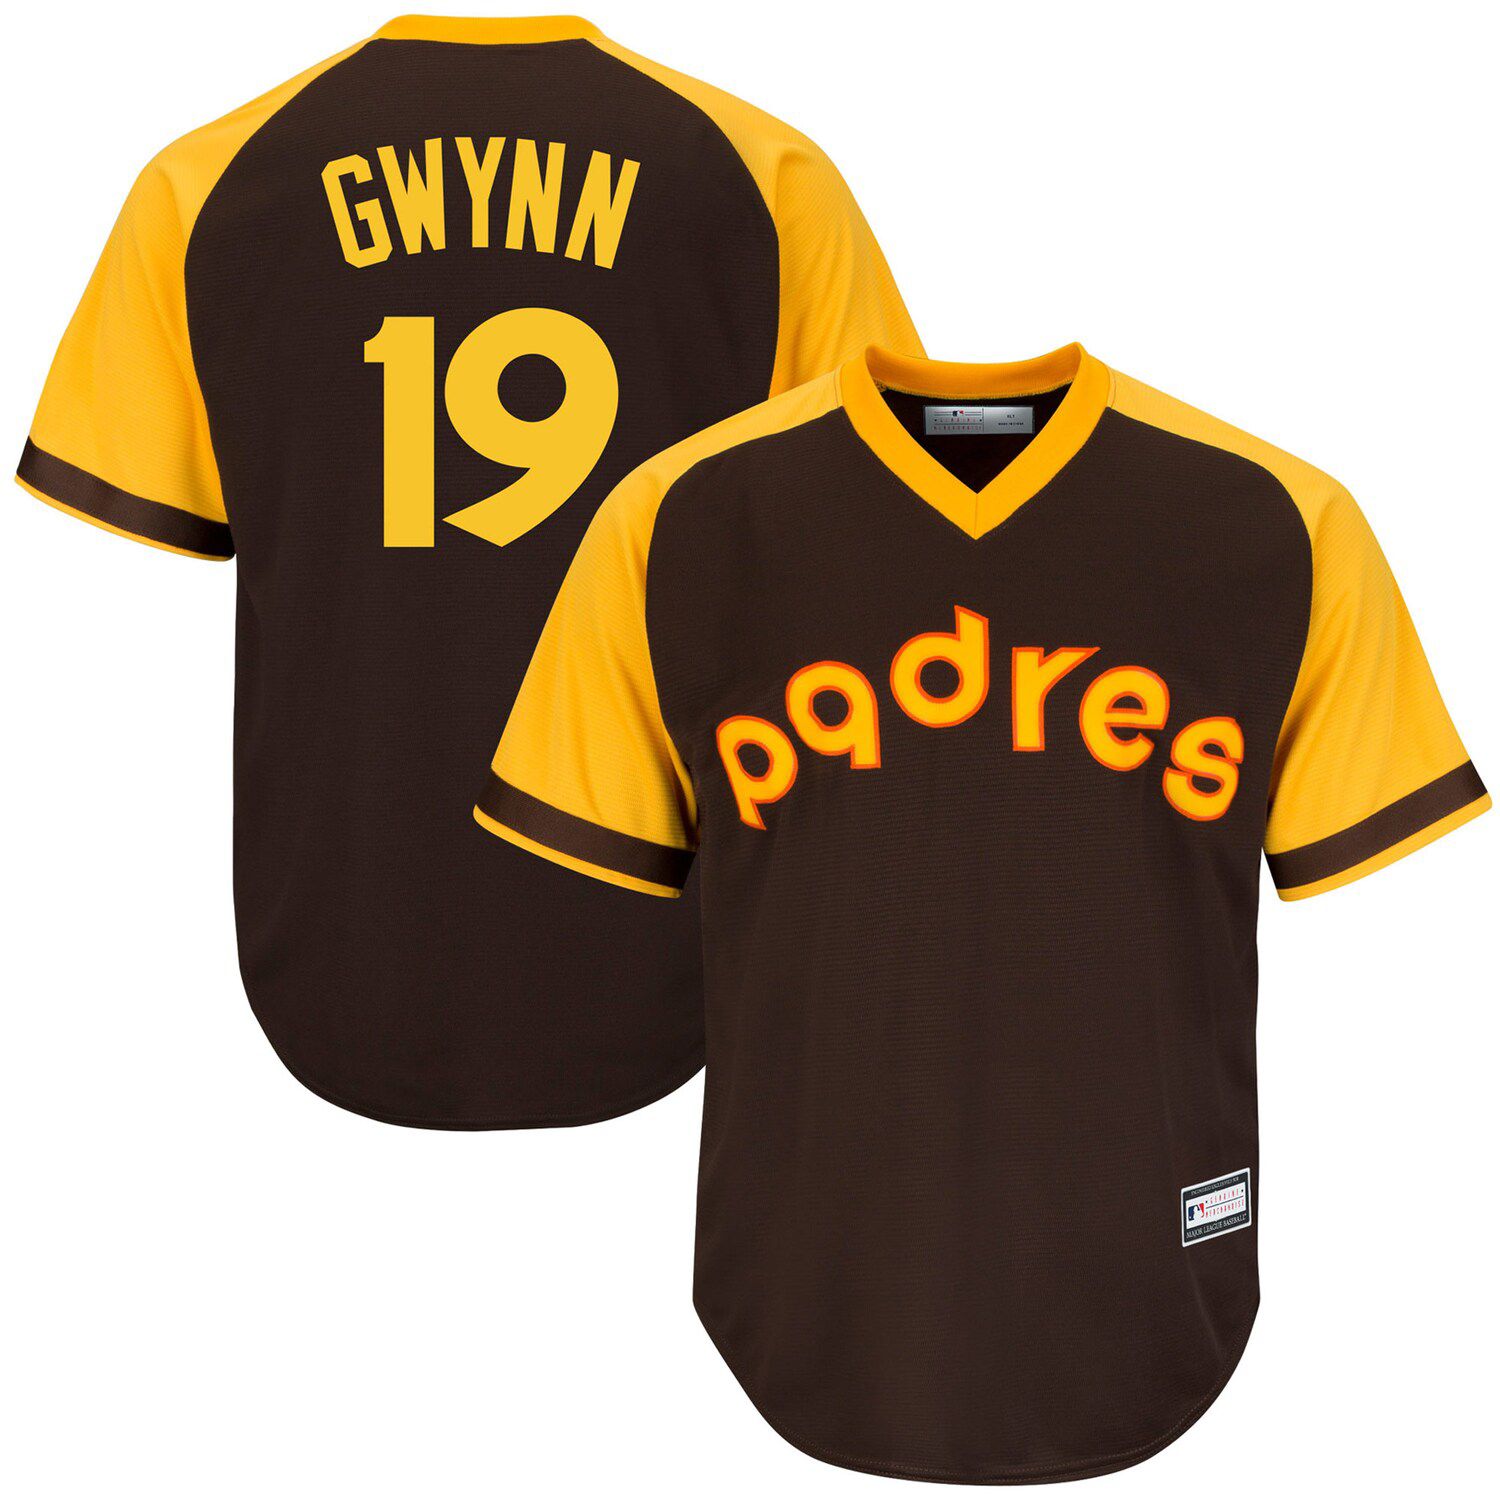 tony gwynn jersey number